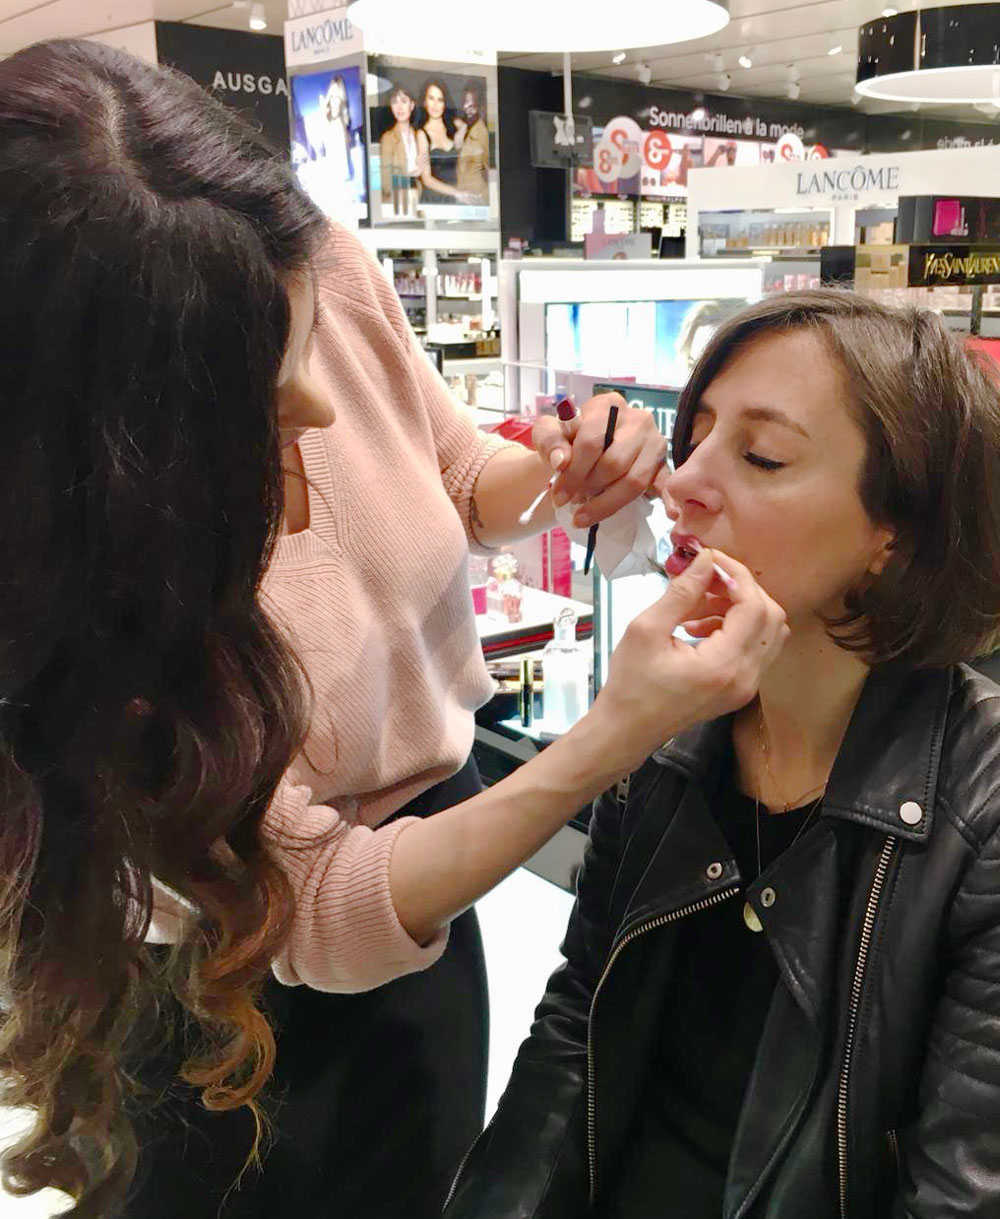 Guerlain National Makeup Artist Didem Abbaszadeh verrät exklusiv auf sonrisa.ch ihre besten Schmink-und Beauty-Tipps.